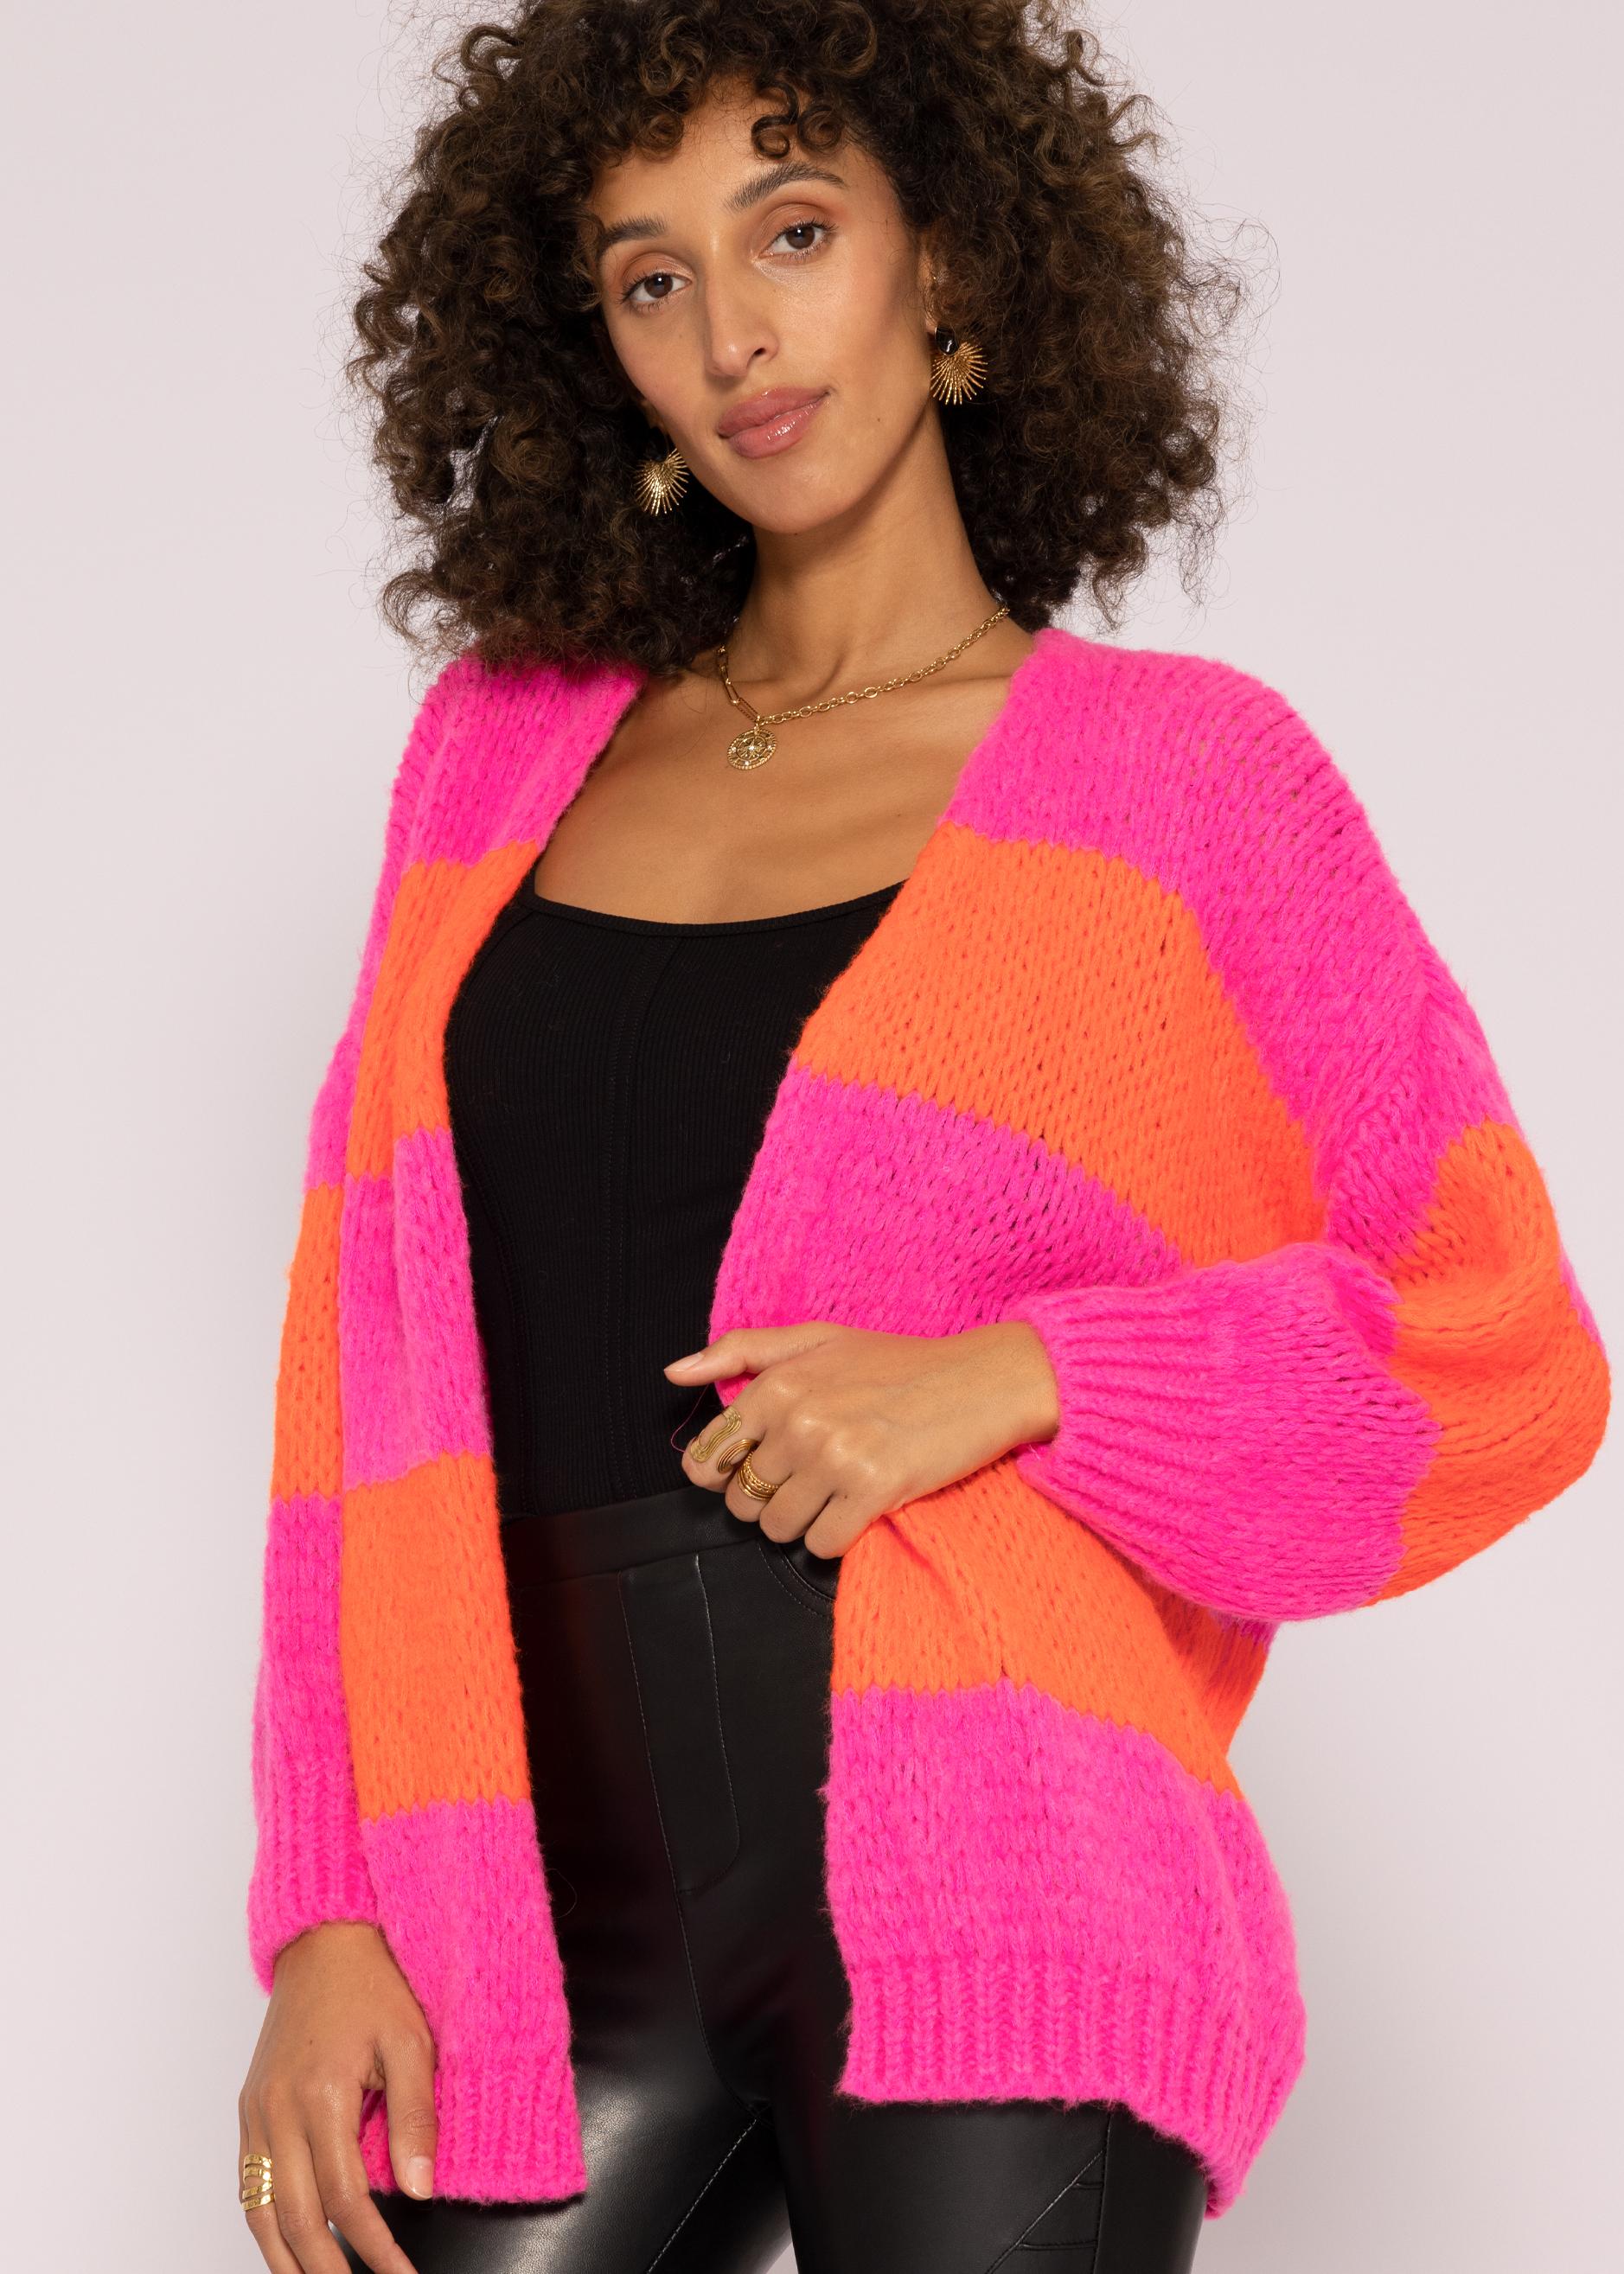 Rosa L DAMEN Pullovers & Sweatshirts Strickjacke Oversize Rabatt 64 % Zara Strickjacke 